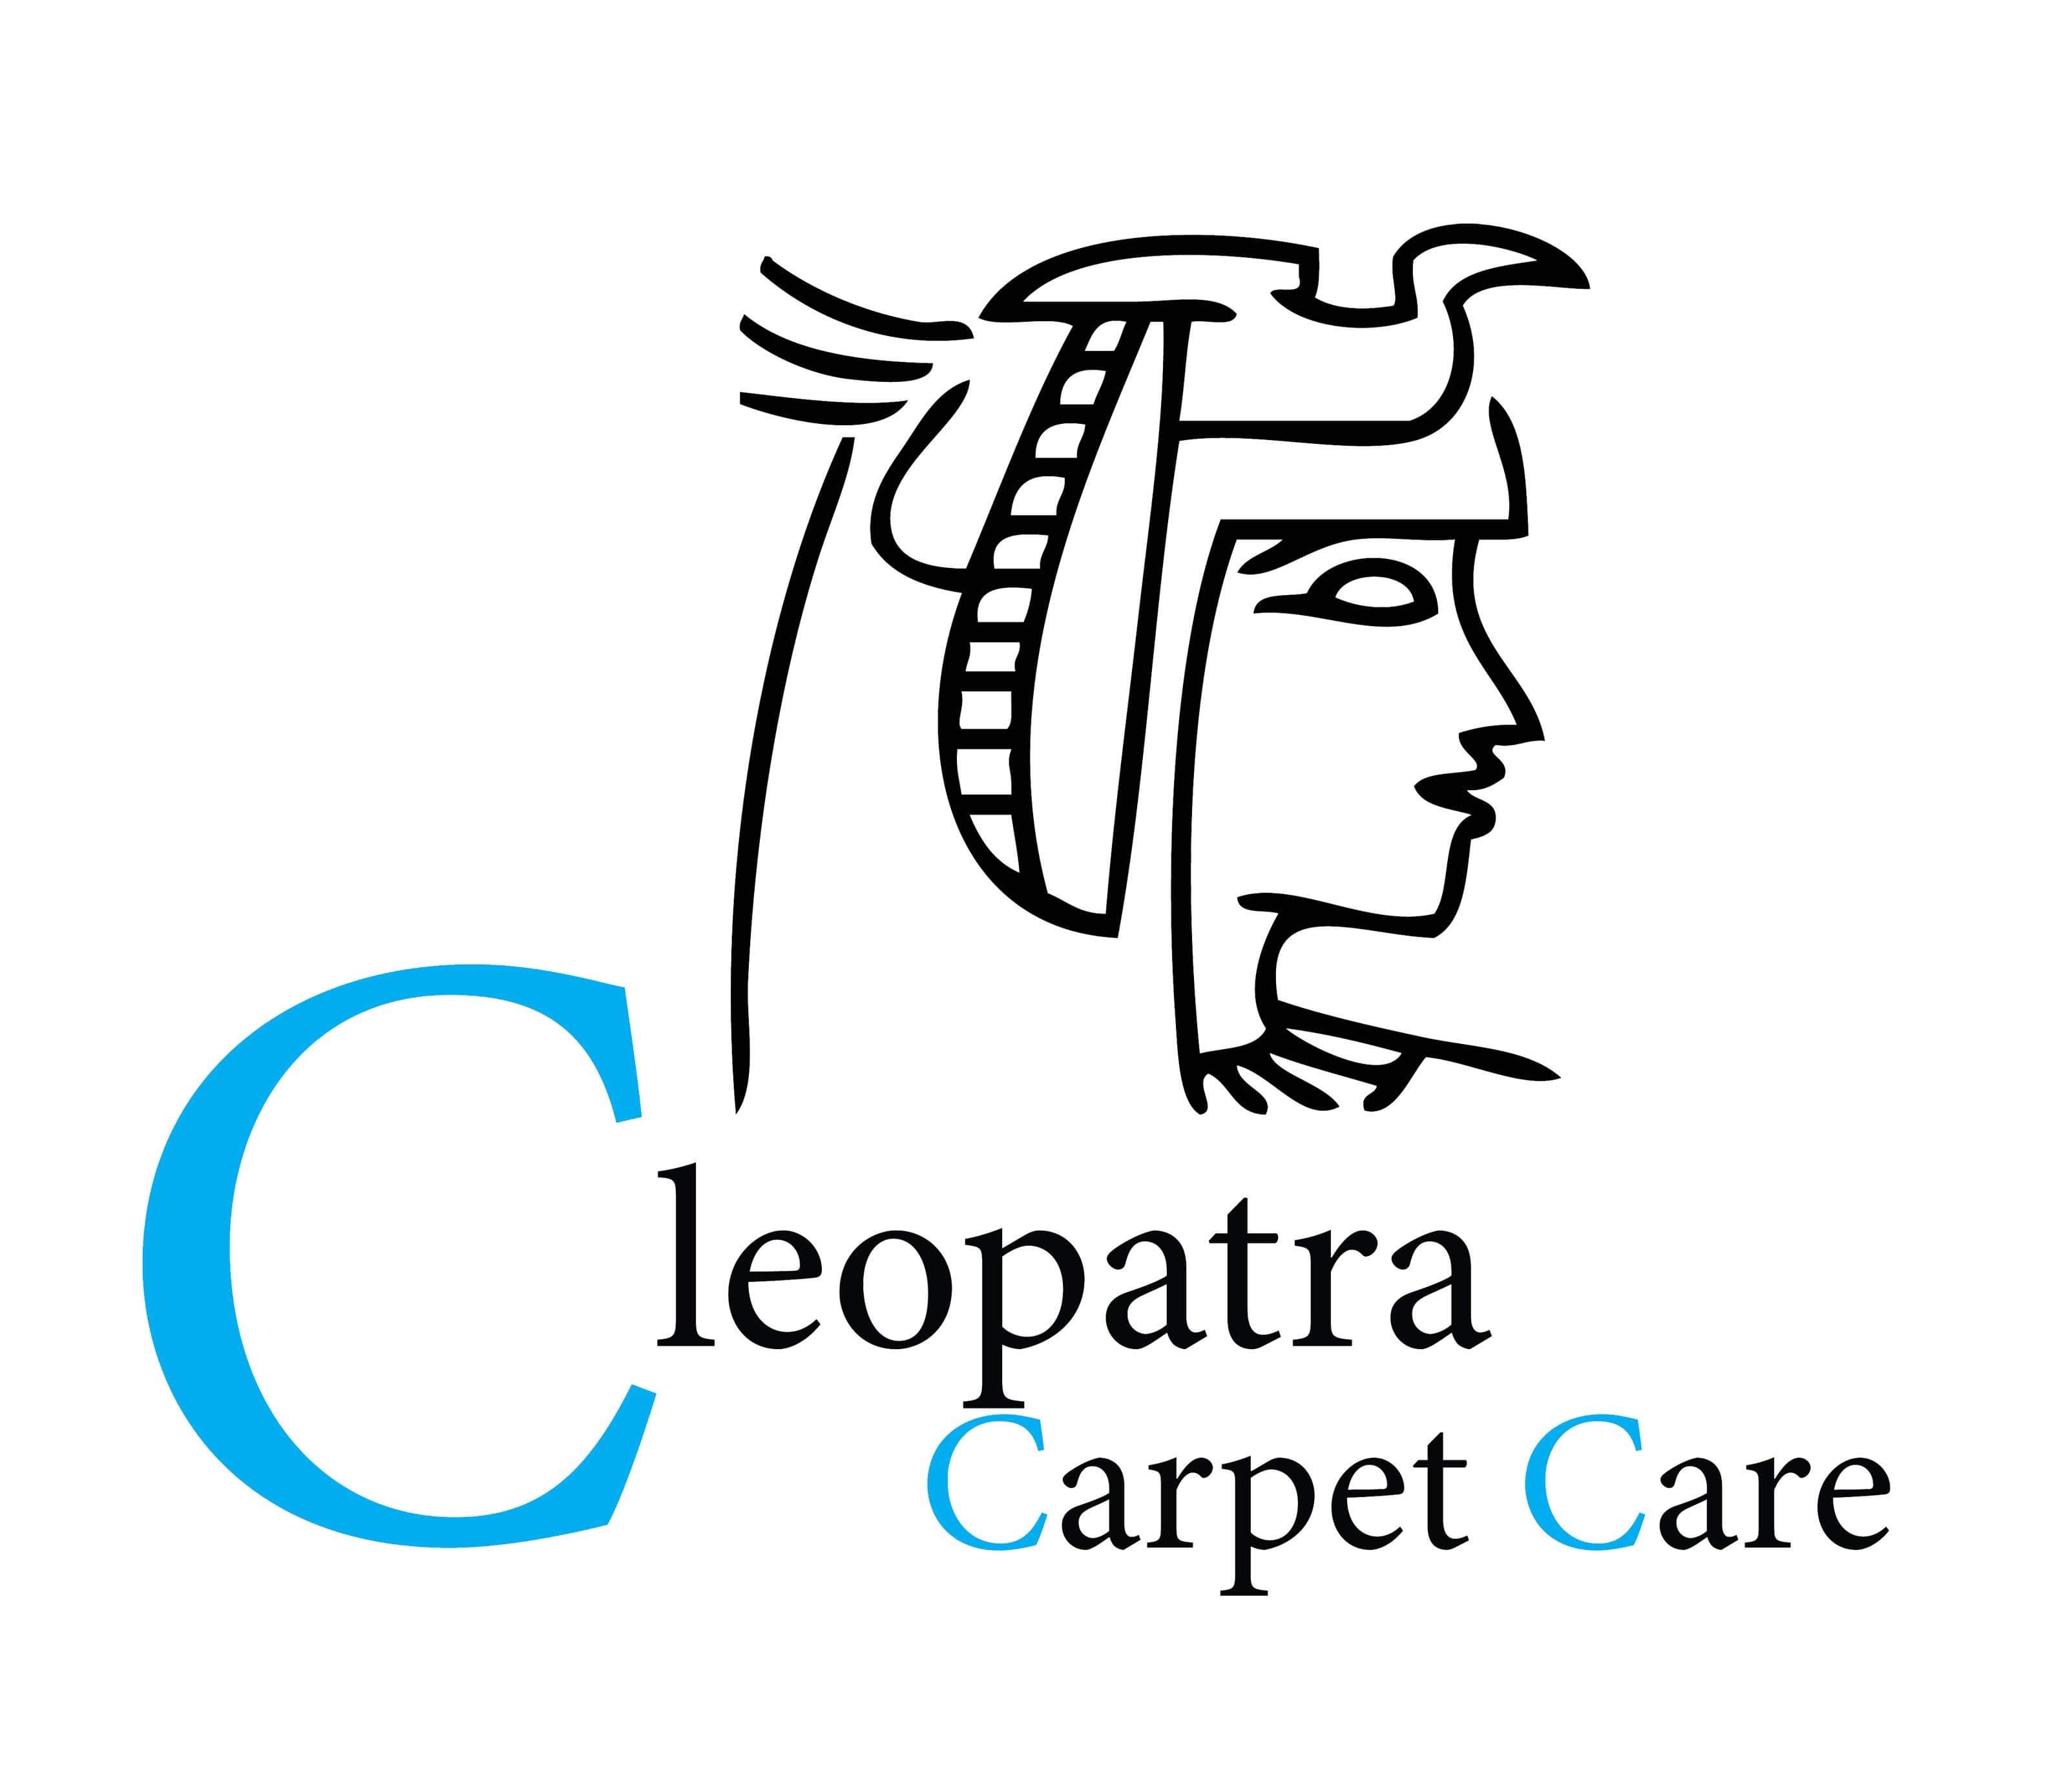 Cleopatra Carpet Care